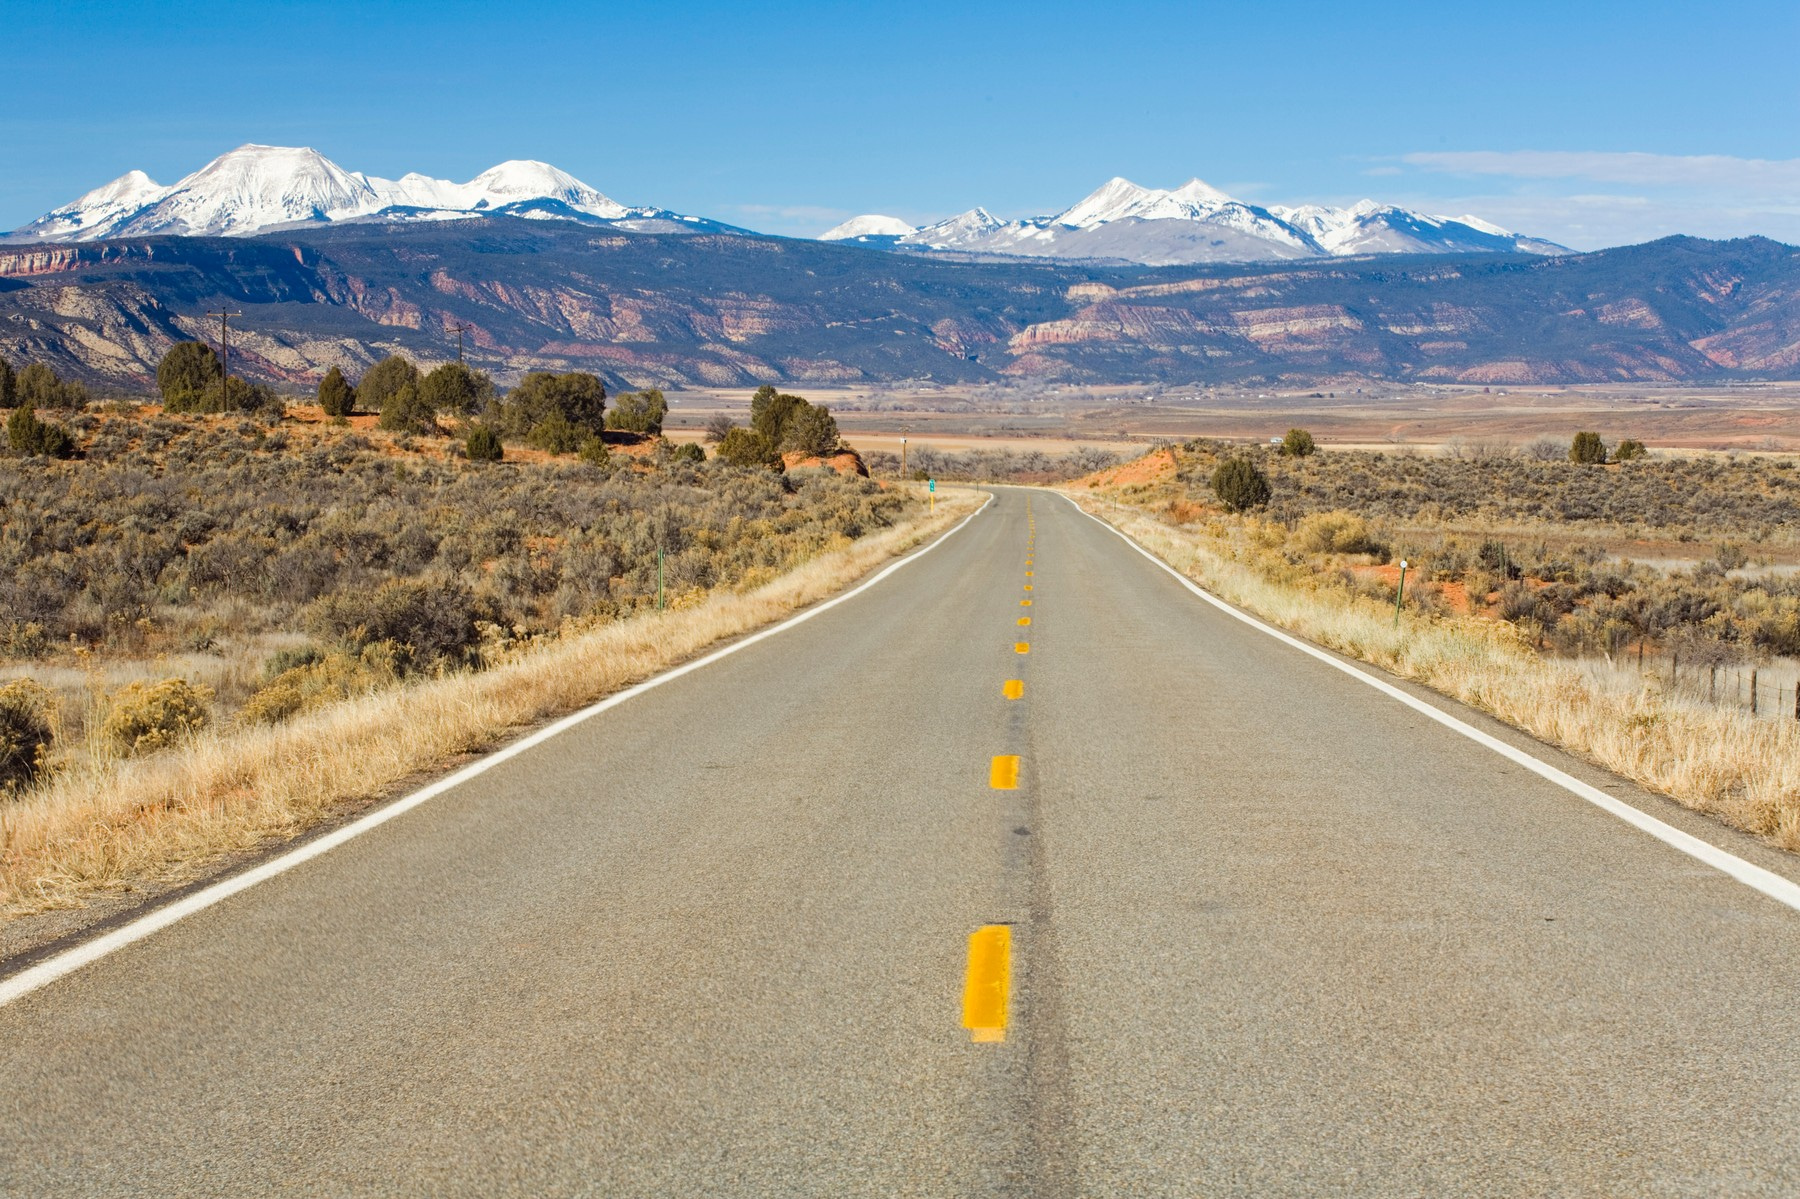 Silnice 90 mezi státy Utah a Colorado, USA.